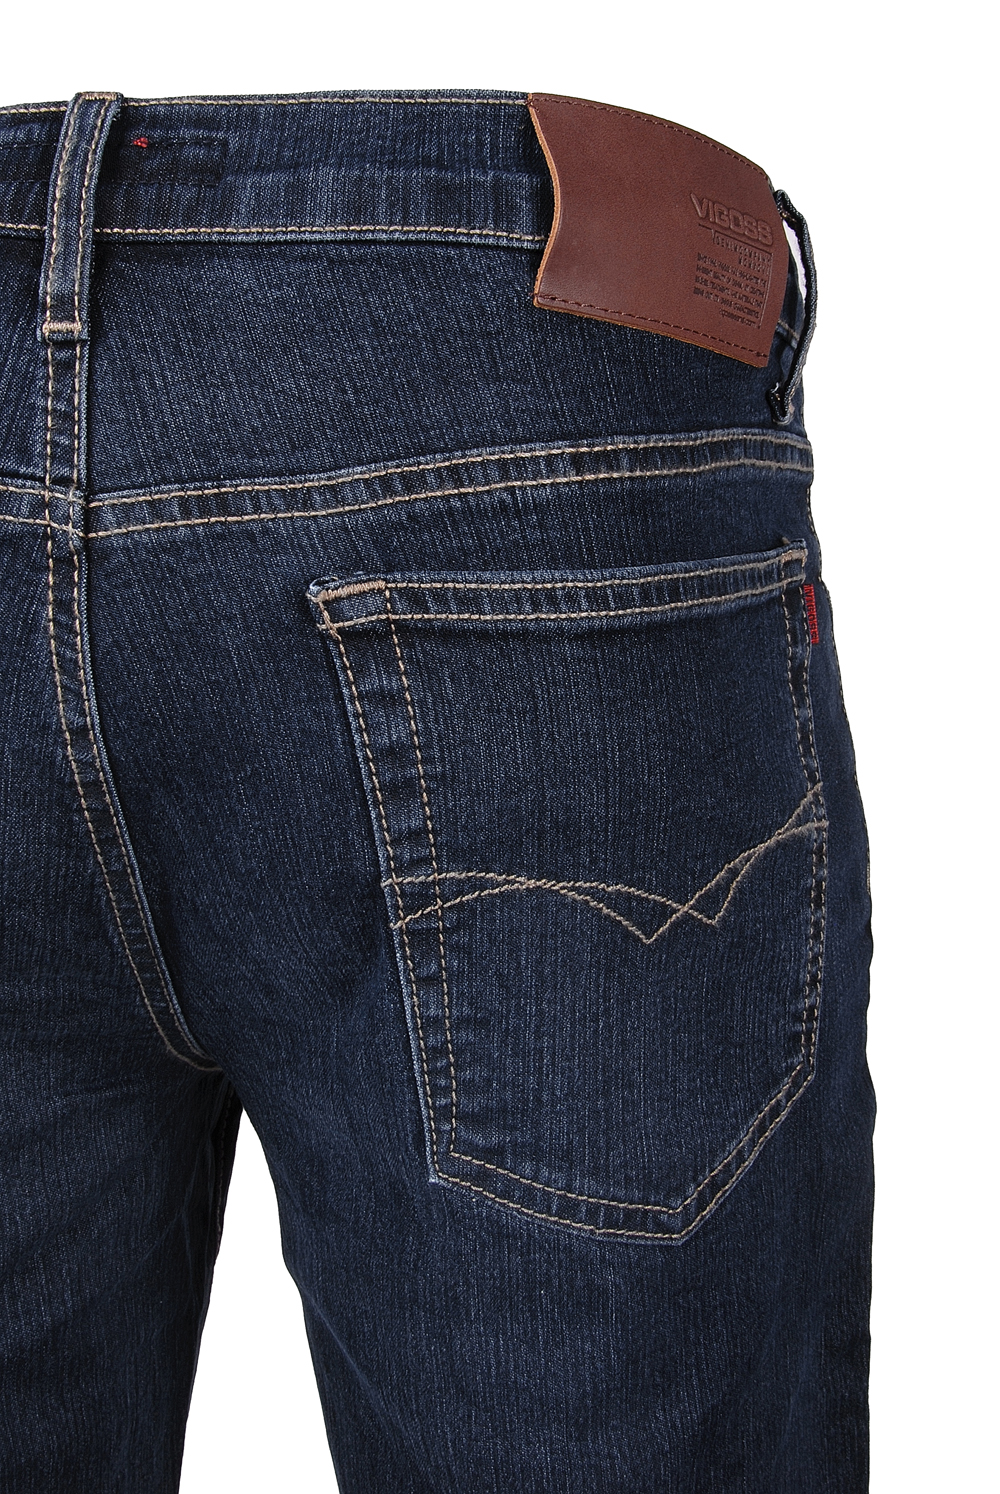 Vigoss jeans kalhoty | Papion